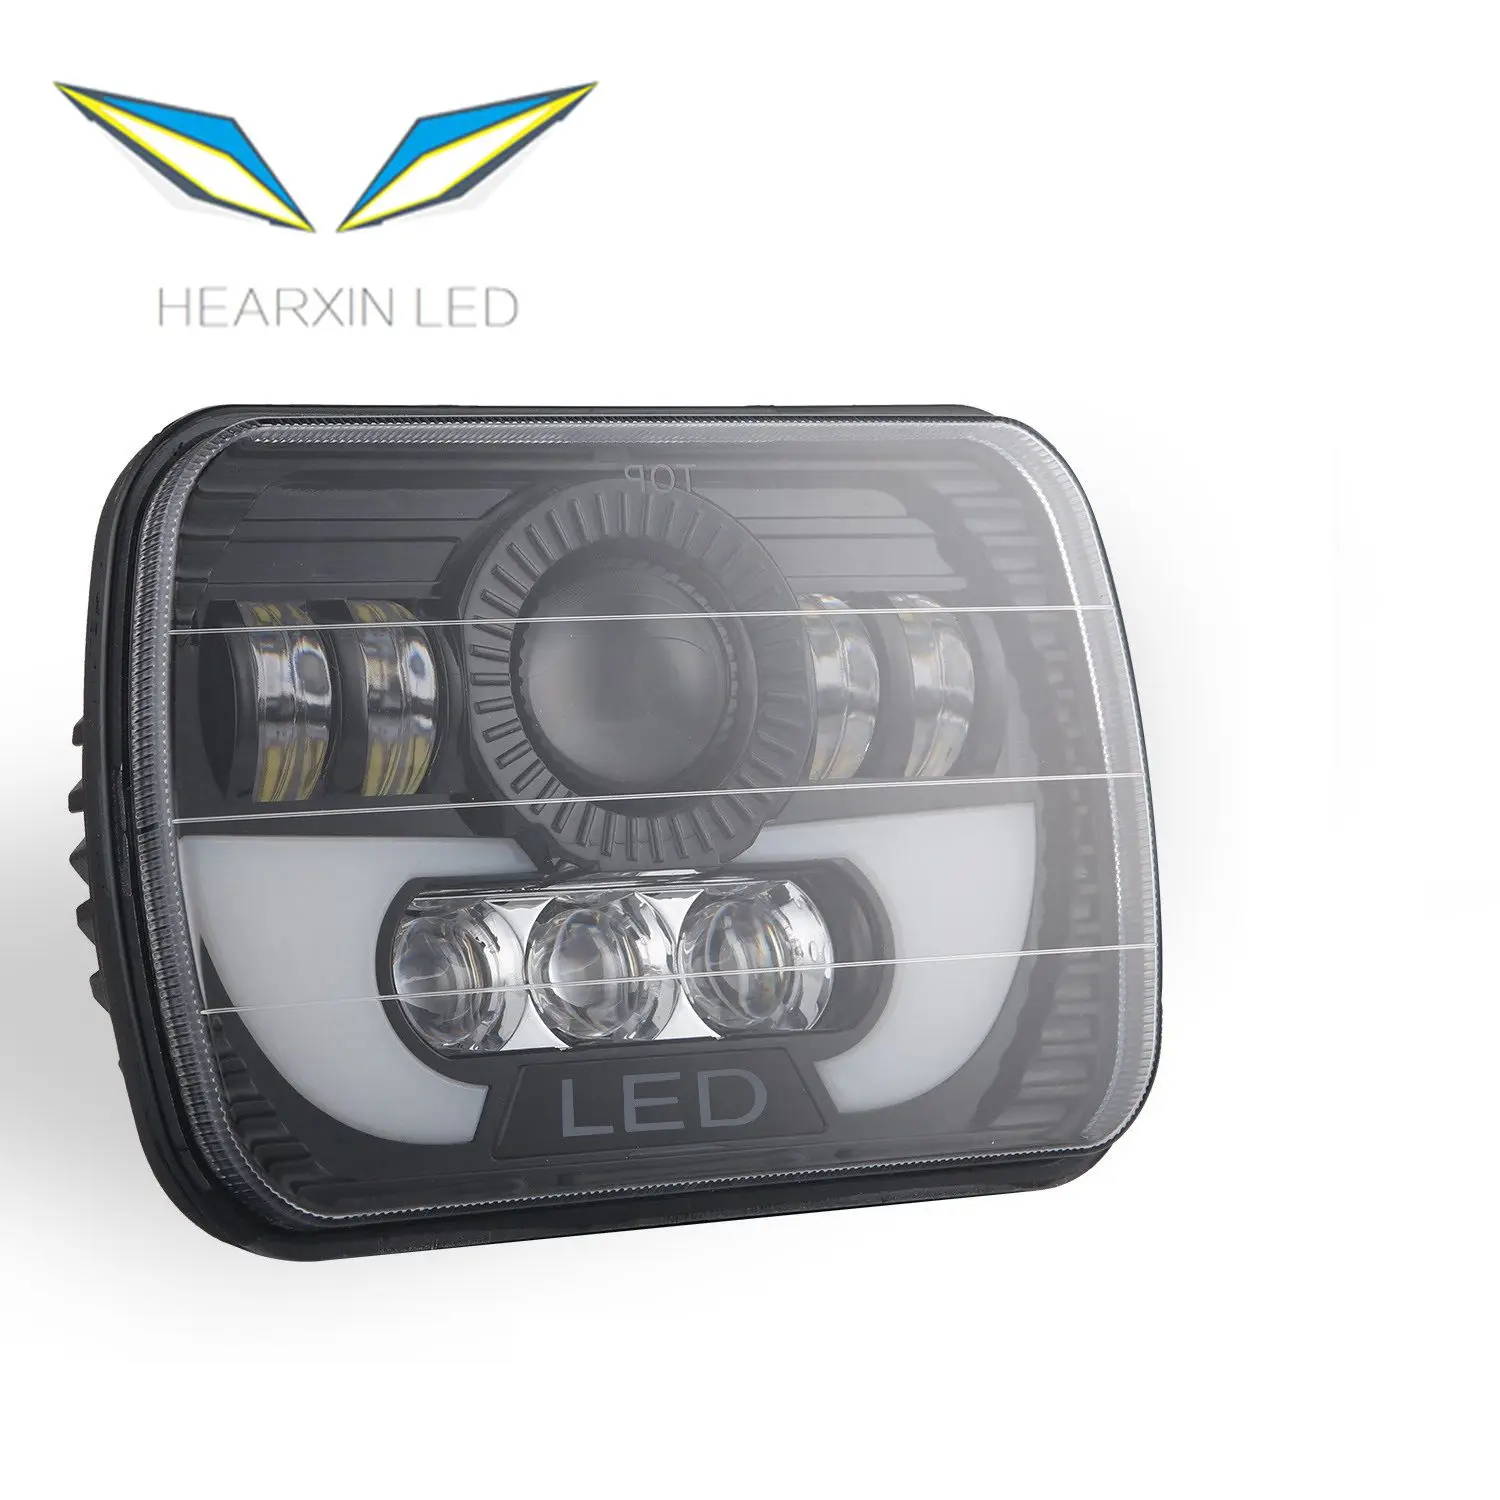 7x6  5x7 inch 300W LED Headlight Rectangular Hi-Lo Light for Car Truck SUV Waterproof Shockproof Anti-flicker Car Lights